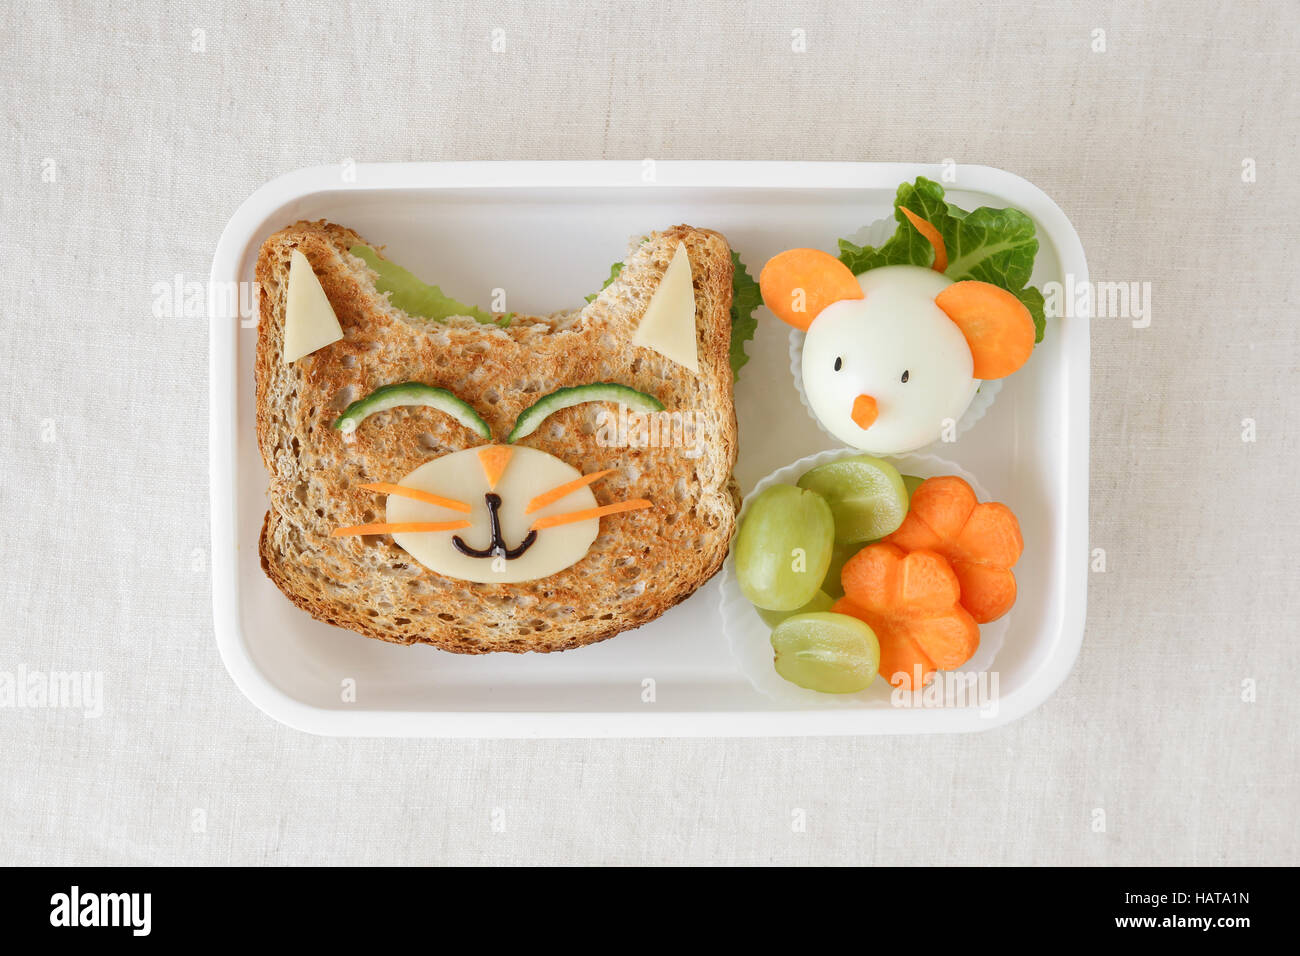 https://c8.alamy.com/comp/HATA1N/cat-and-mouse-healthy-lunch-box-fun-food-art-for-kids-HATA1N.jpg